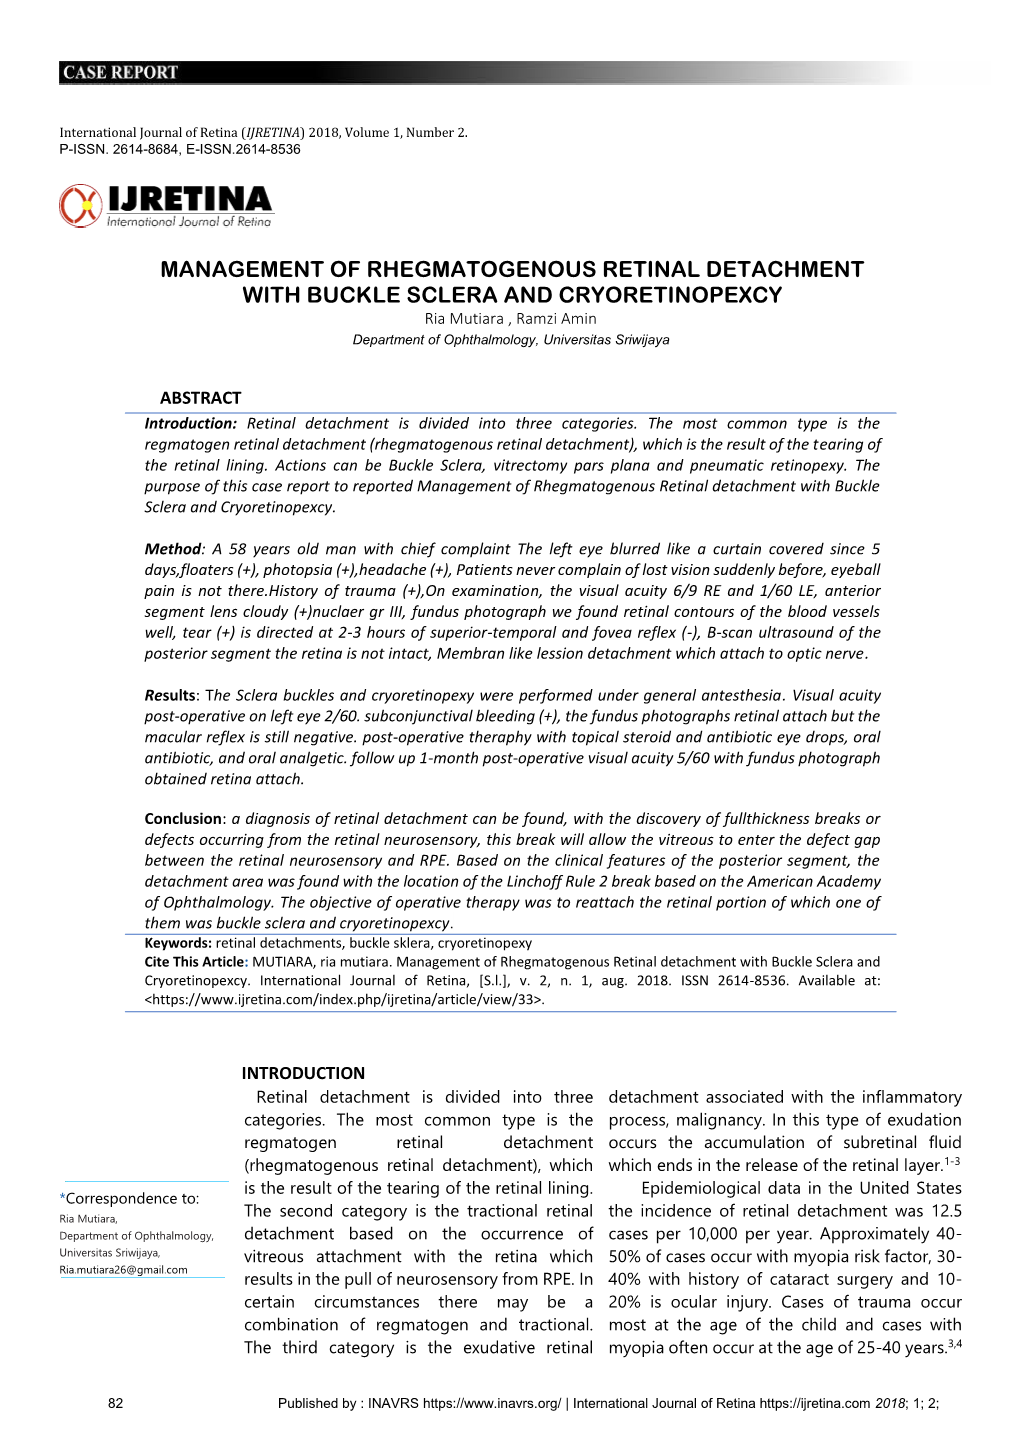 MANAGEMENT of RHEGMATOGENOUS RETINAL DETACHMENT with BUCKLE SCLERA and CRYORETINOPEXCY Ria Mutiara , Ramzi Amin Department of Ophthalmology, Universitas Sriwijaya